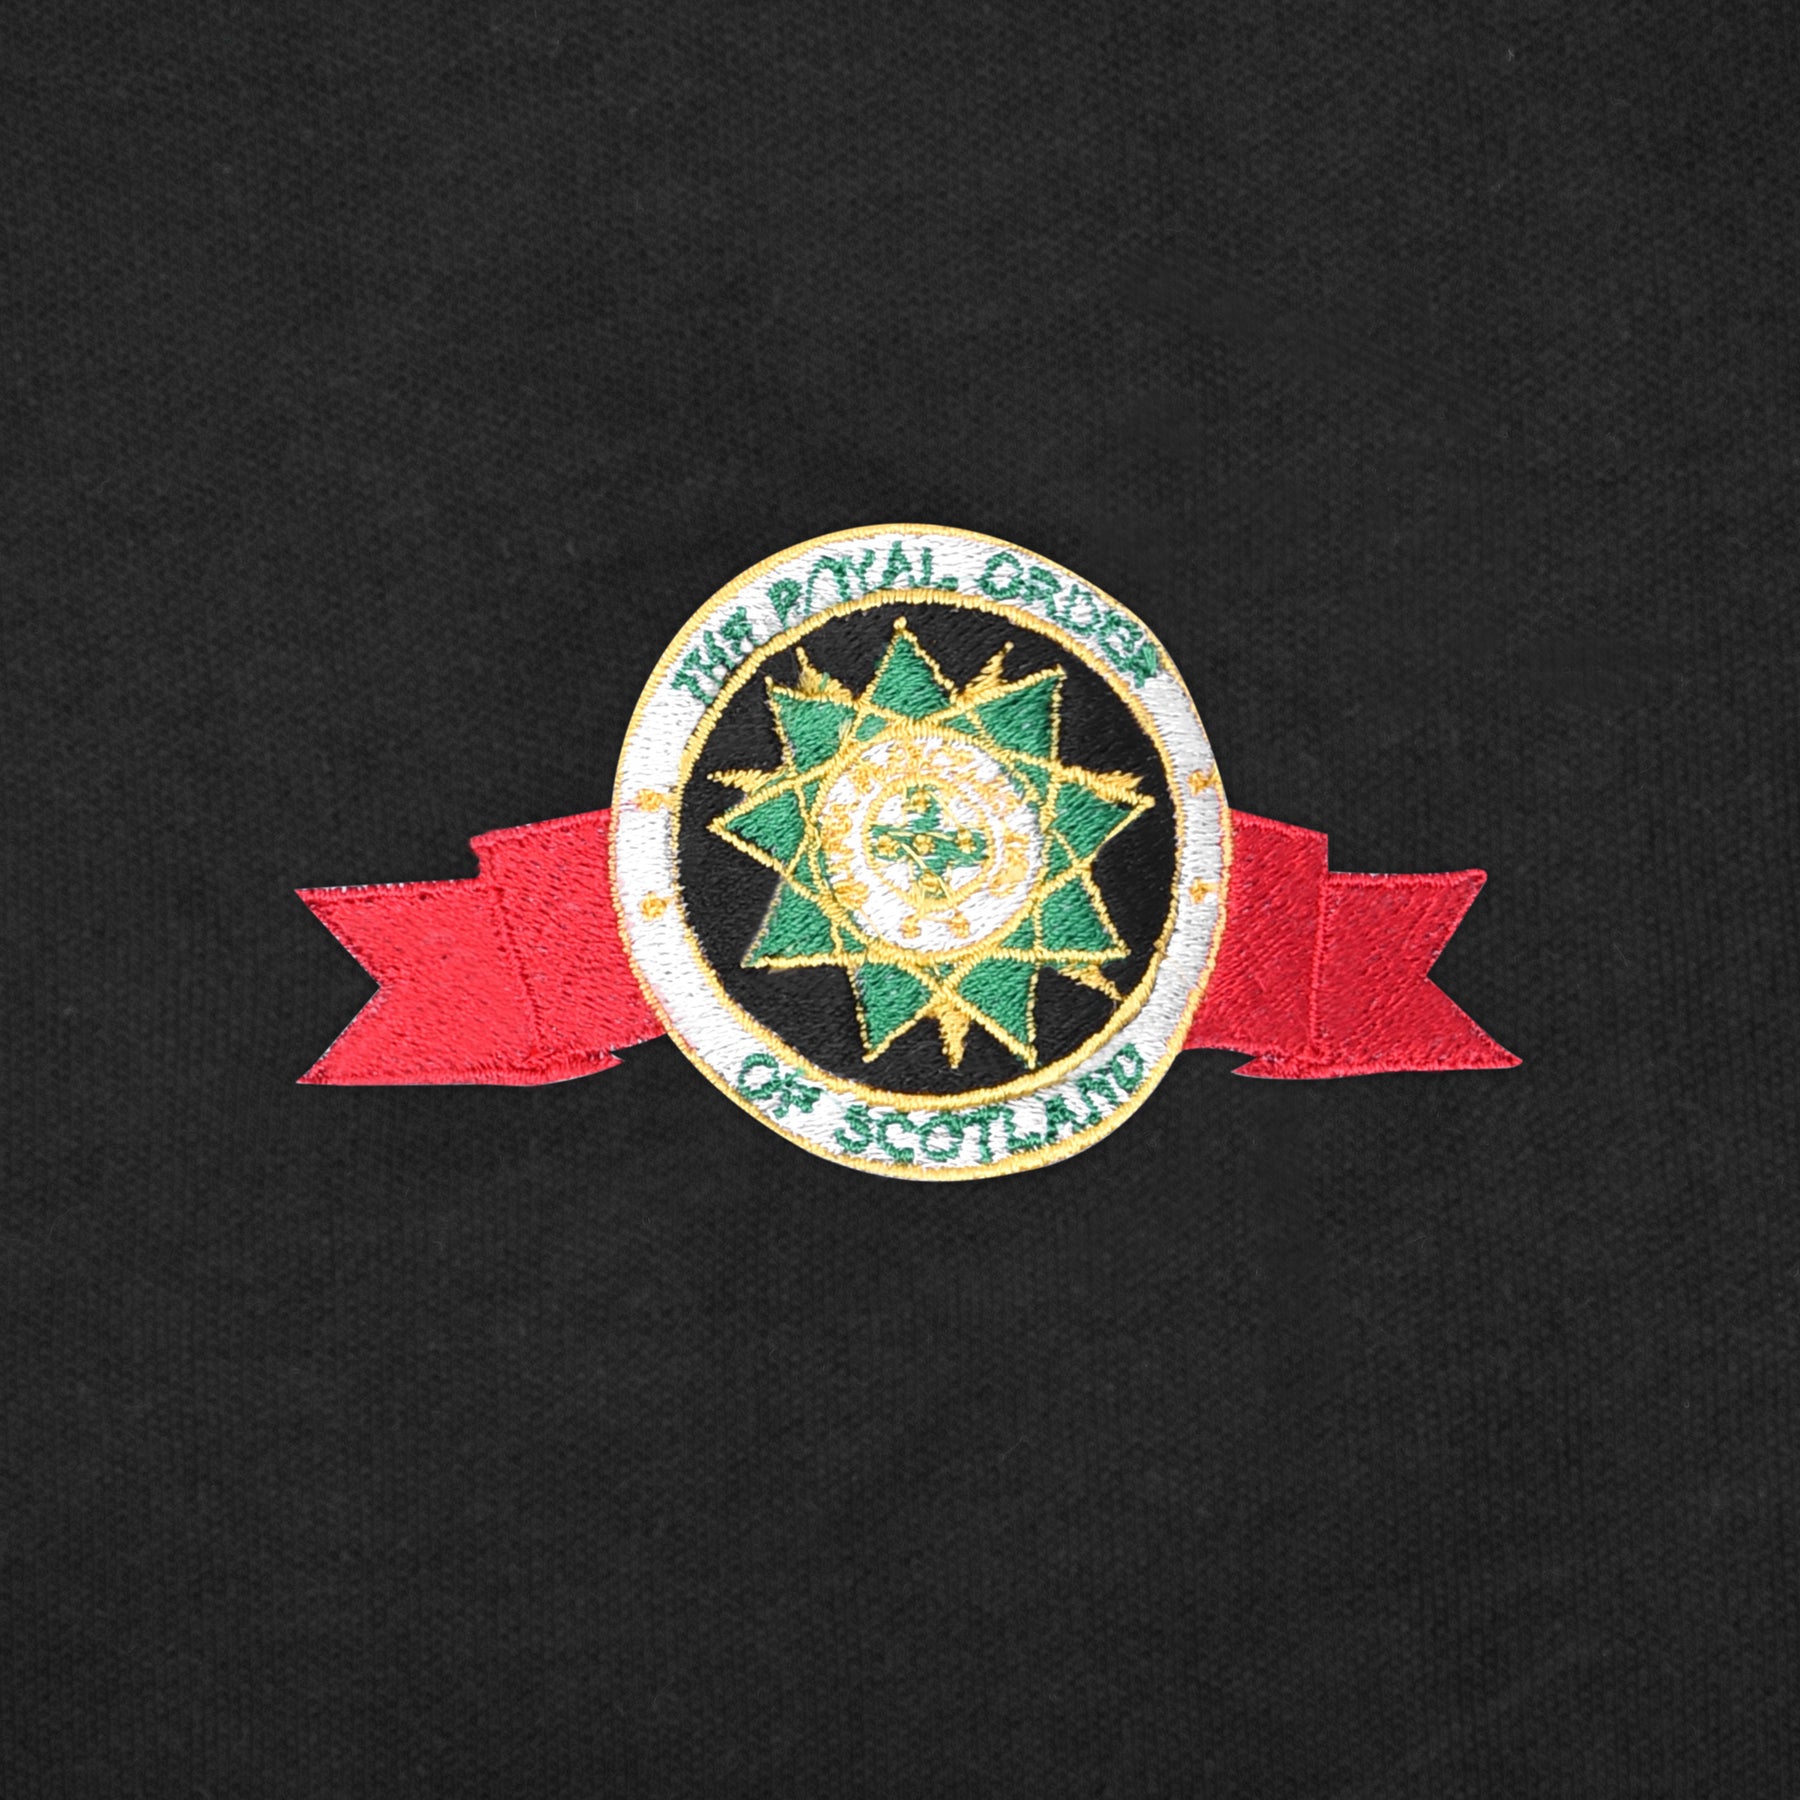 The Royal Order Of Scotland Polo Shirt - Black Color - Bricks Masons